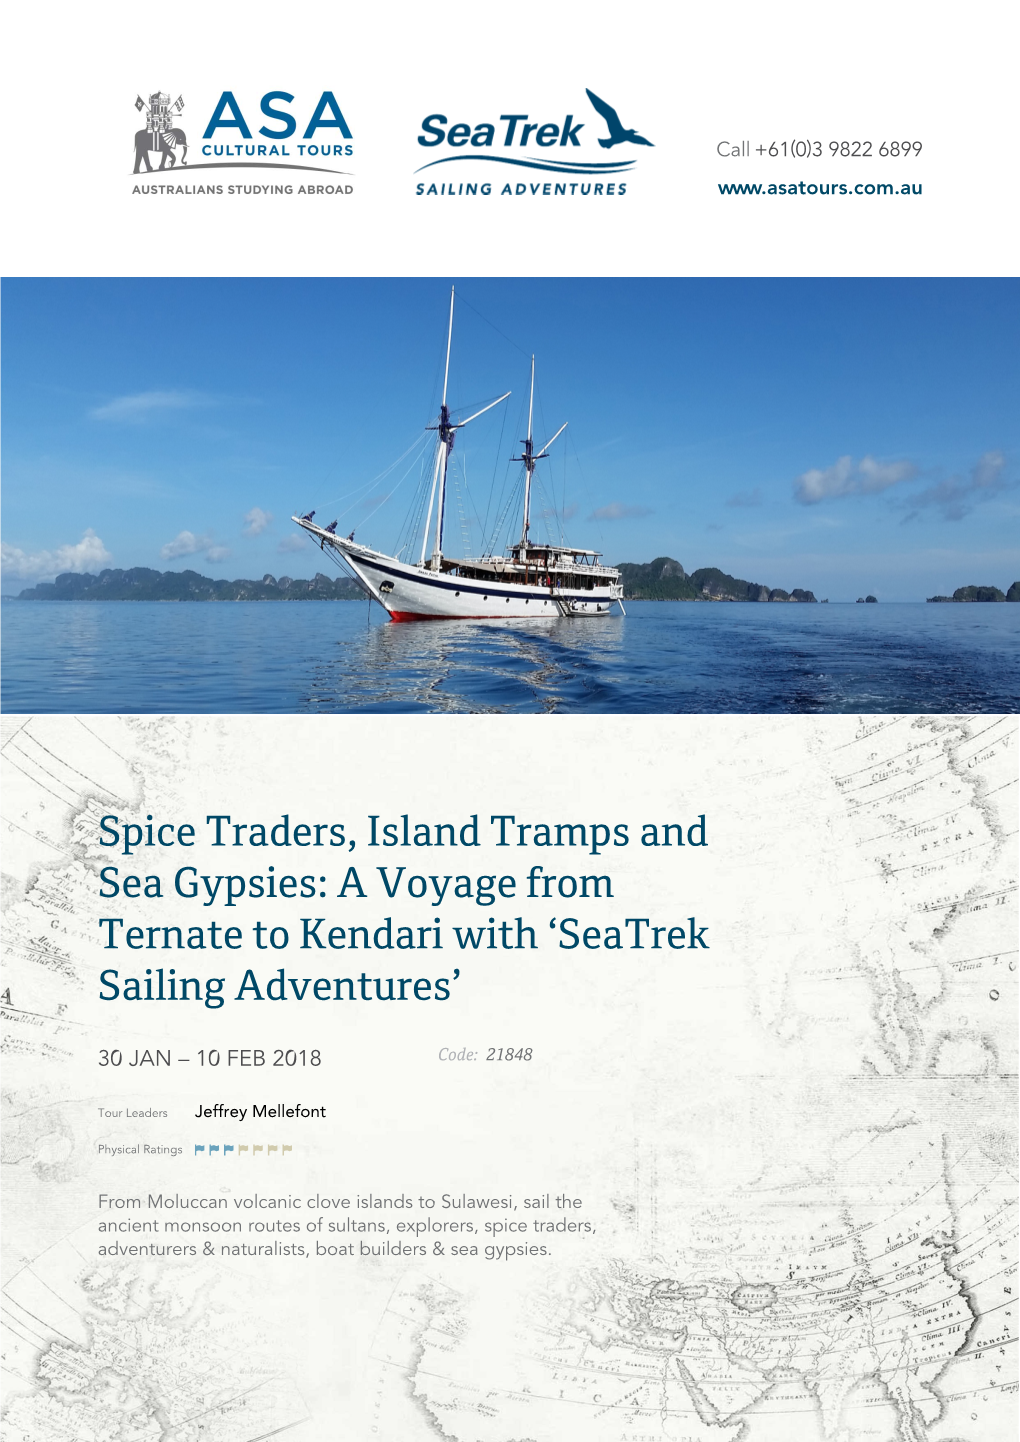 A Voyage from Ternate to Kendari with 'Seatrek Sailing Adventures'